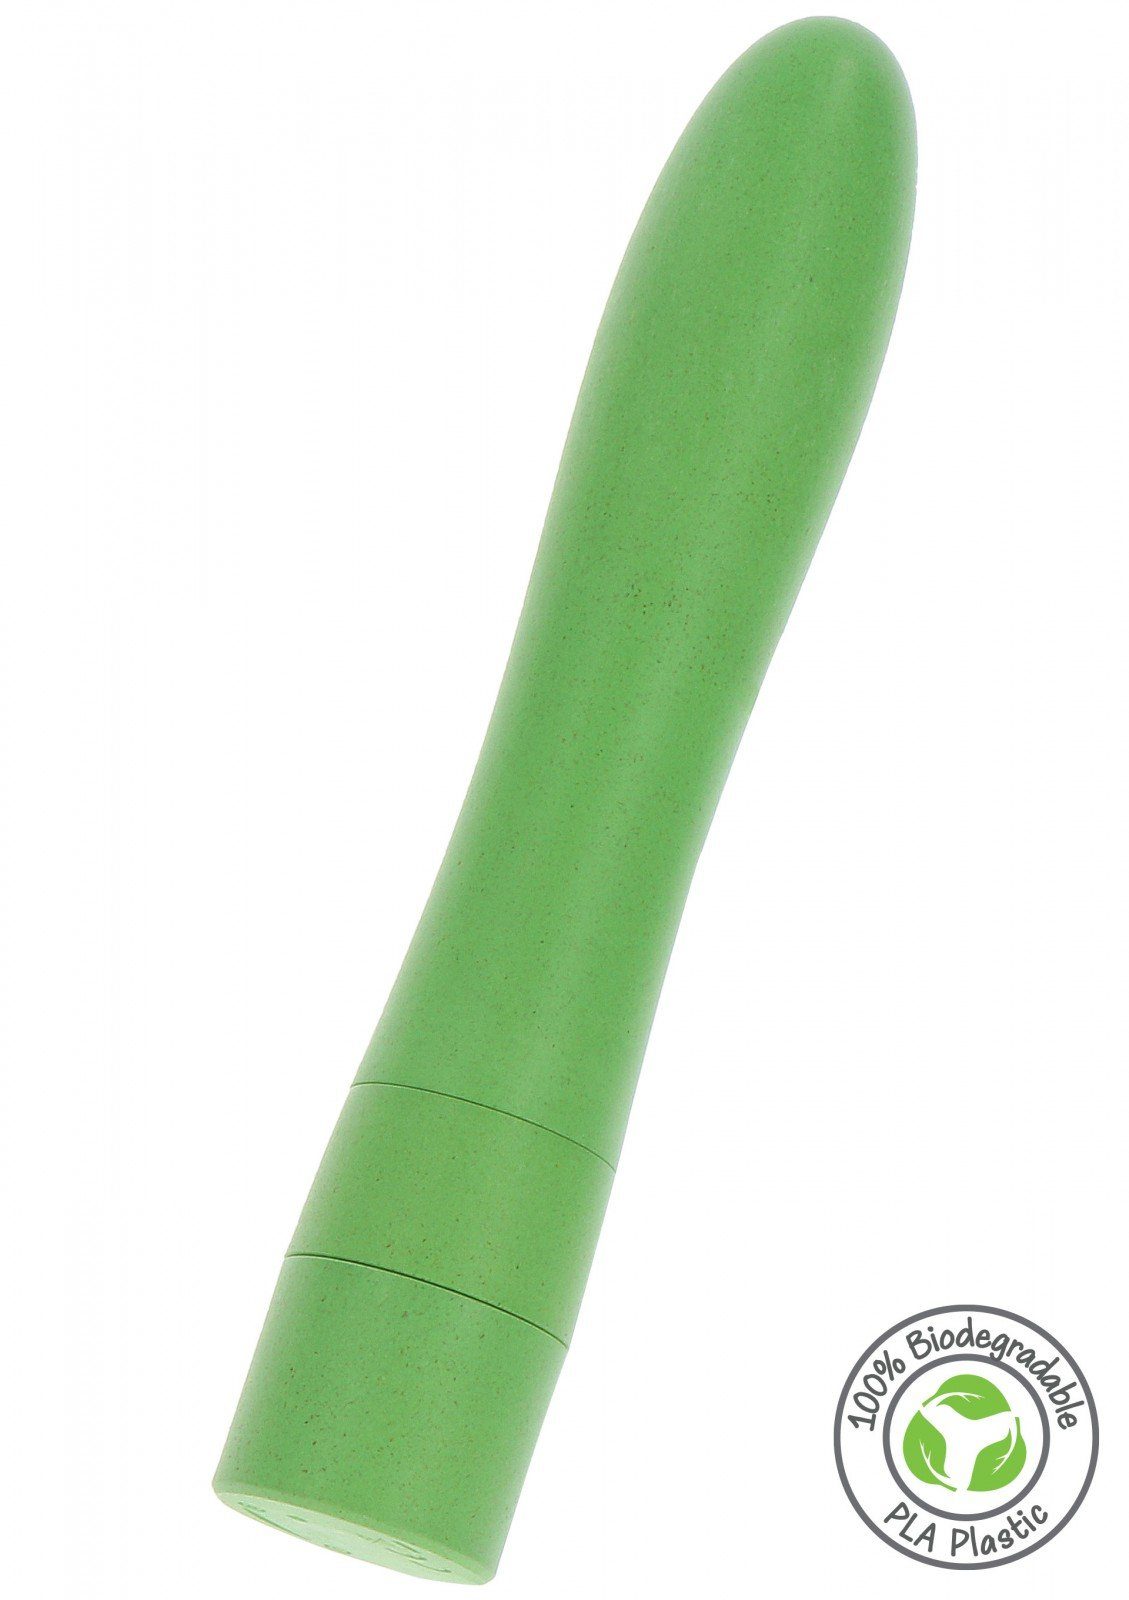 FUCK GREEN Vibrator Vibrator vegan biologisch abbaubar 100 - grün 